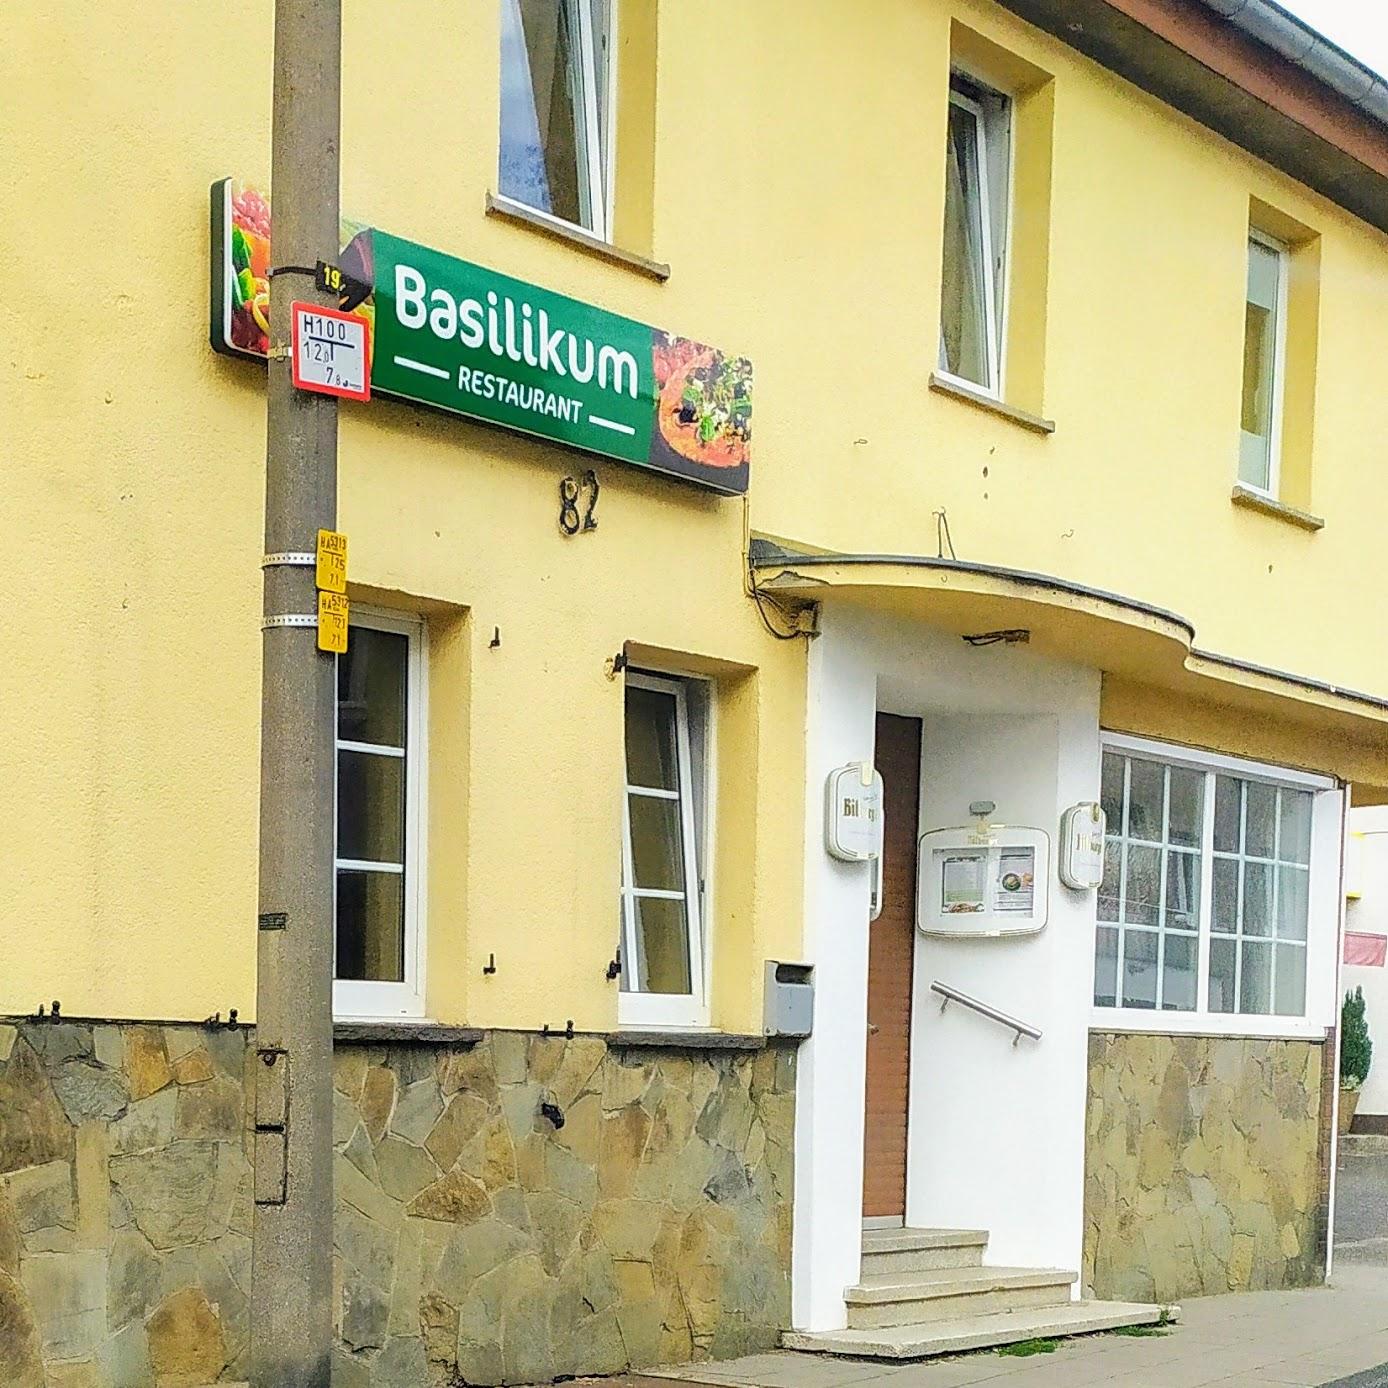 Restaurant "Basilikum Restaurant & Pizzeria" in Niederkassel